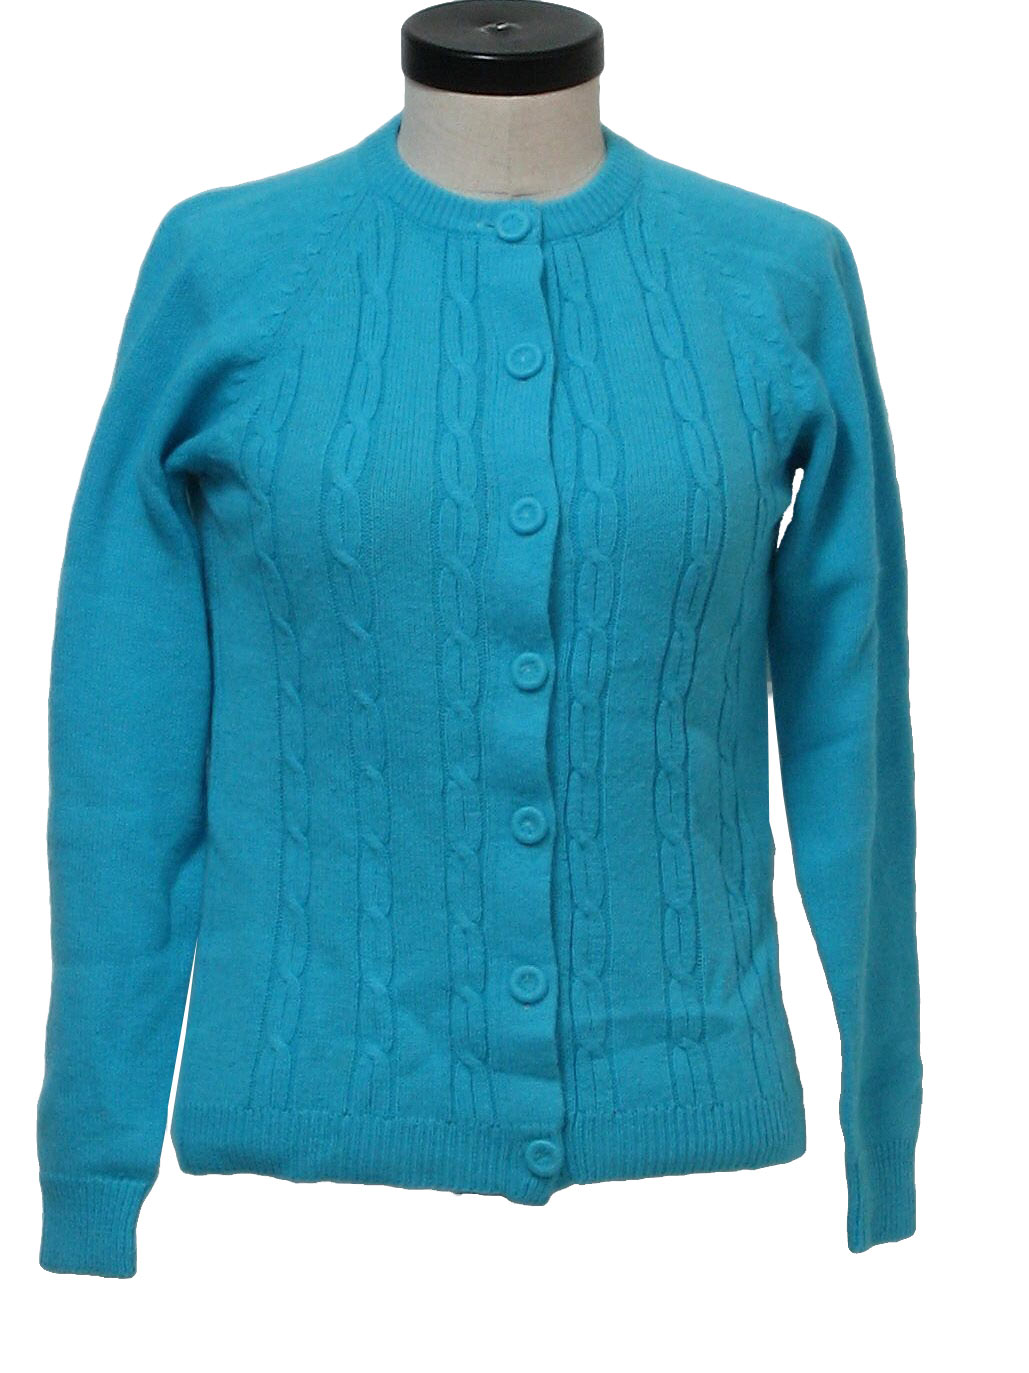 Seventies Vintage Caridgan Sweater: 70s (60s inspired) -Sally ...